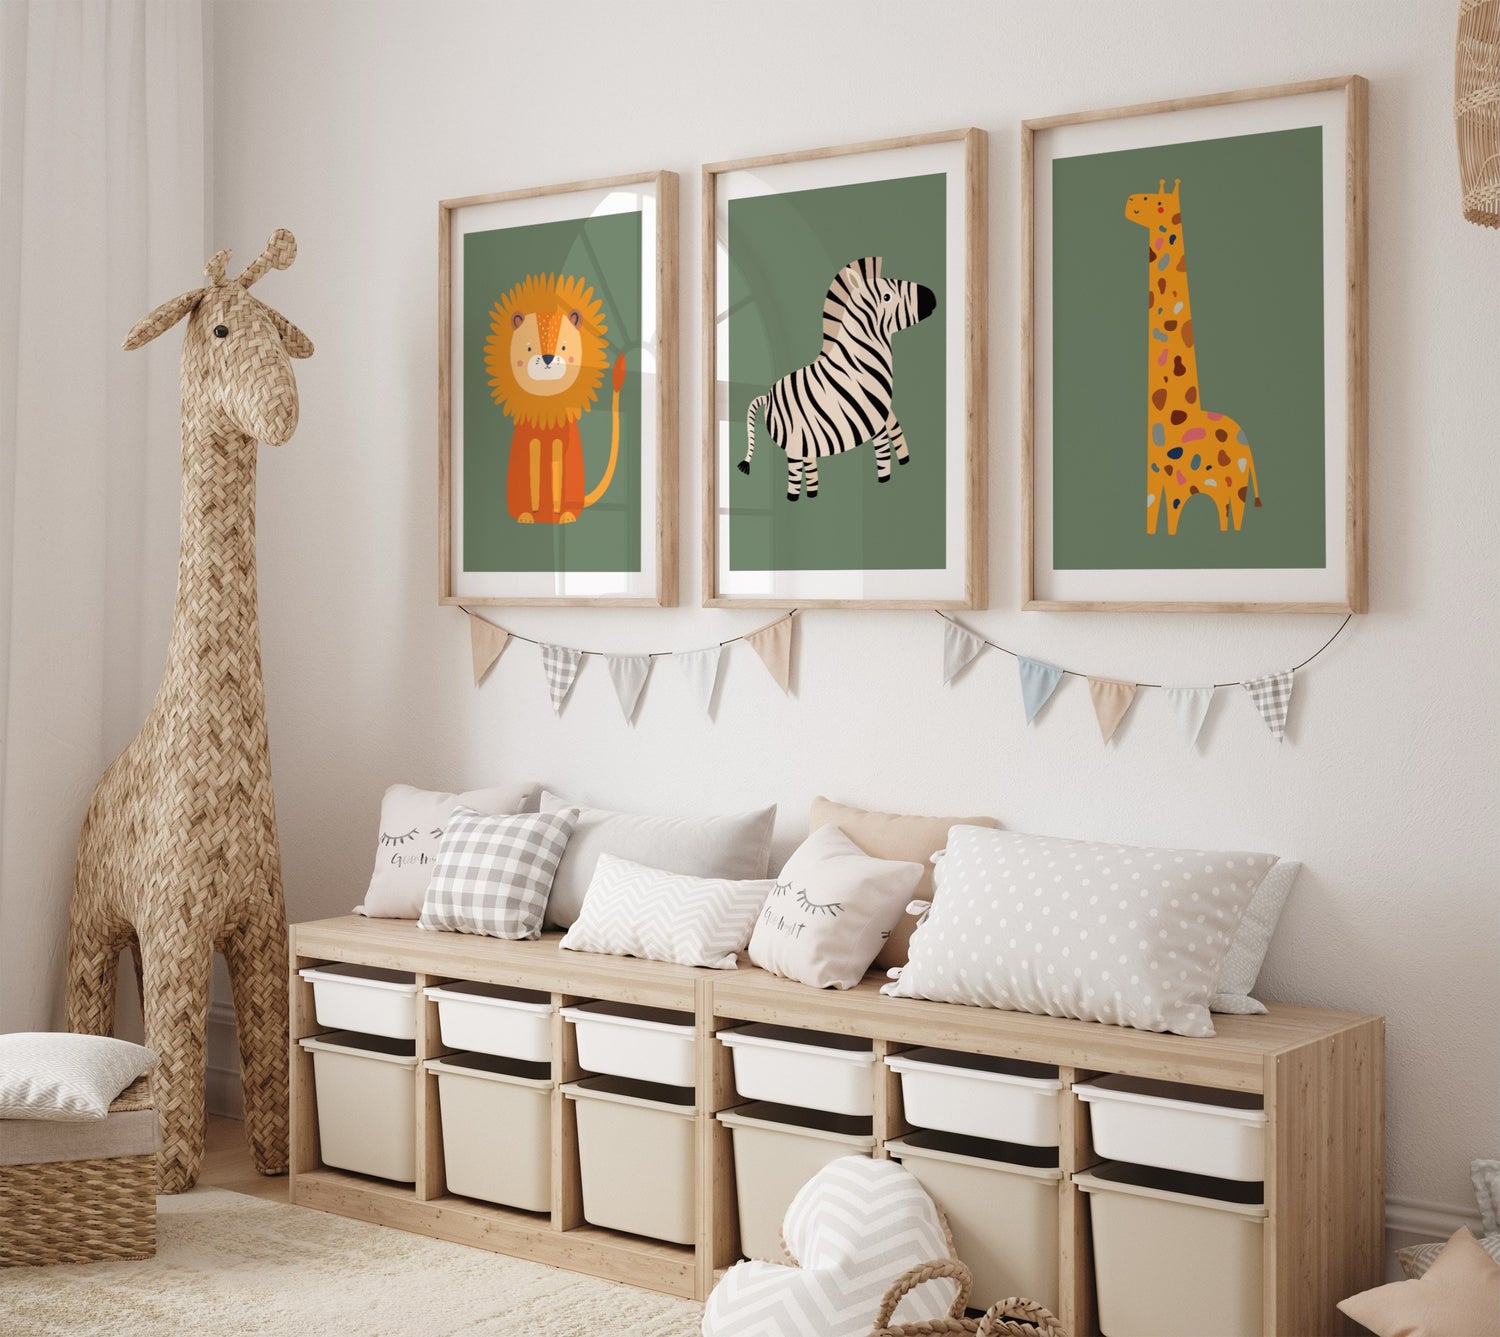 Scandi Prints of a zebra, giraffe and lion